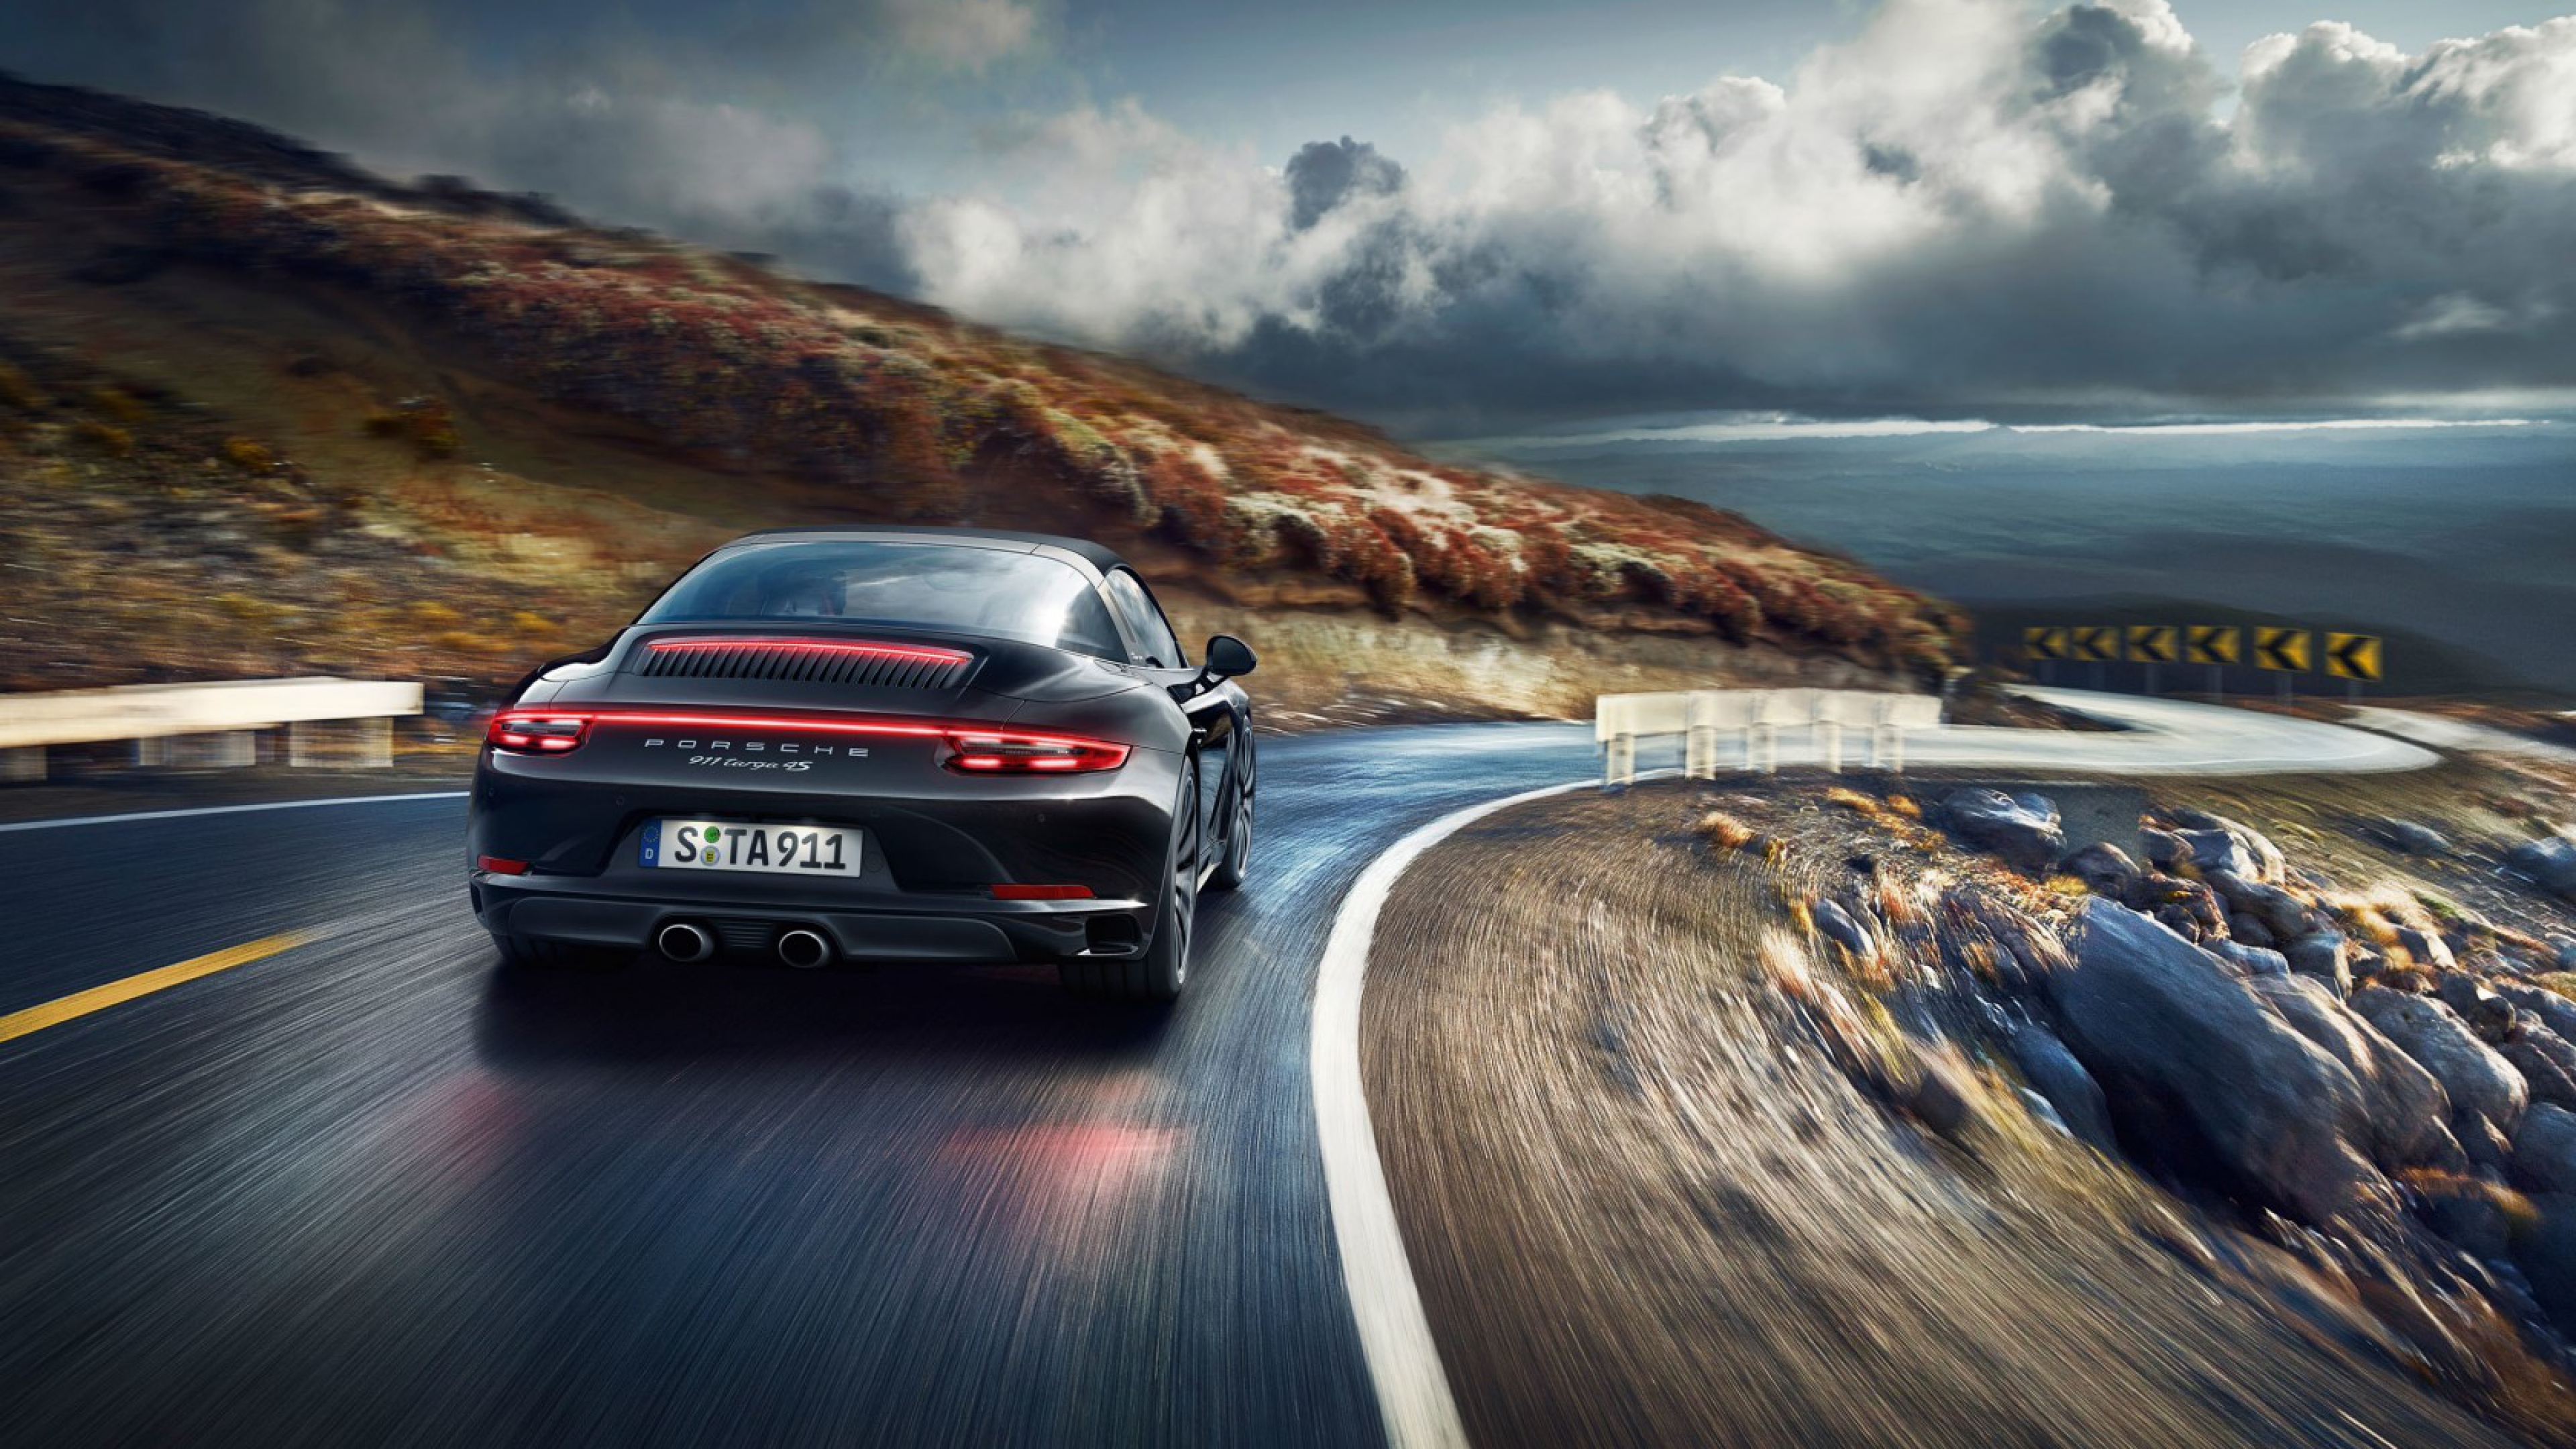 Porsche Wallpaper And Background Image